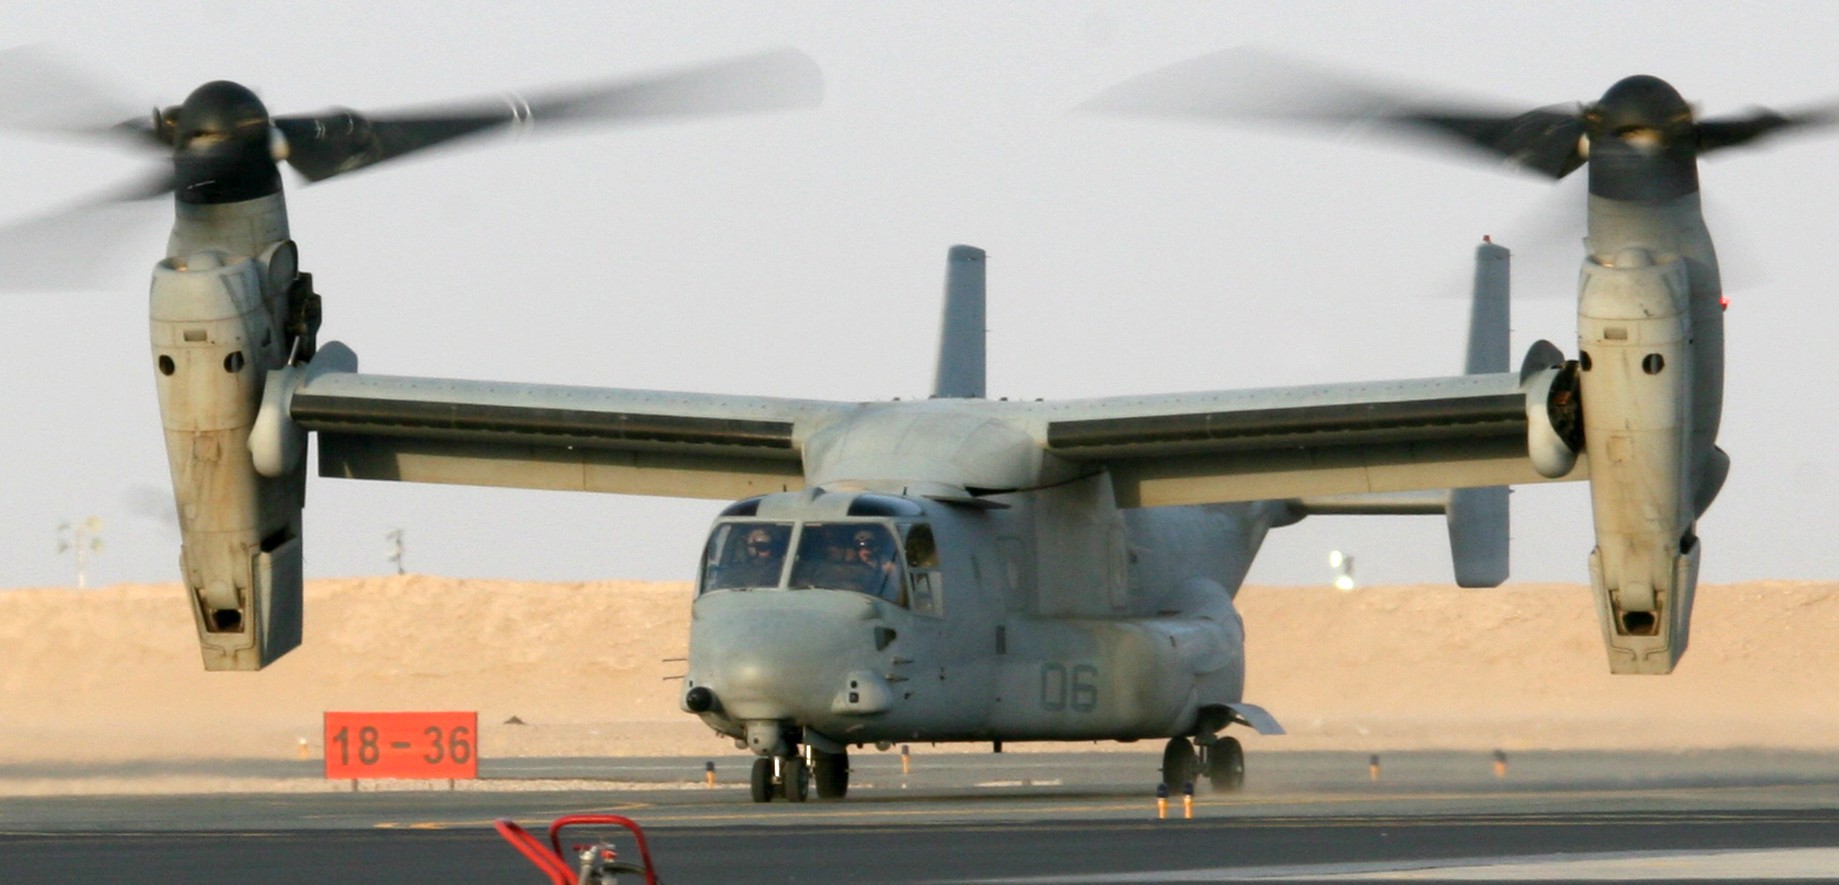 vmm-263 thunder chickens mv-22b osprey udairi army airfield kuwait 2009 104